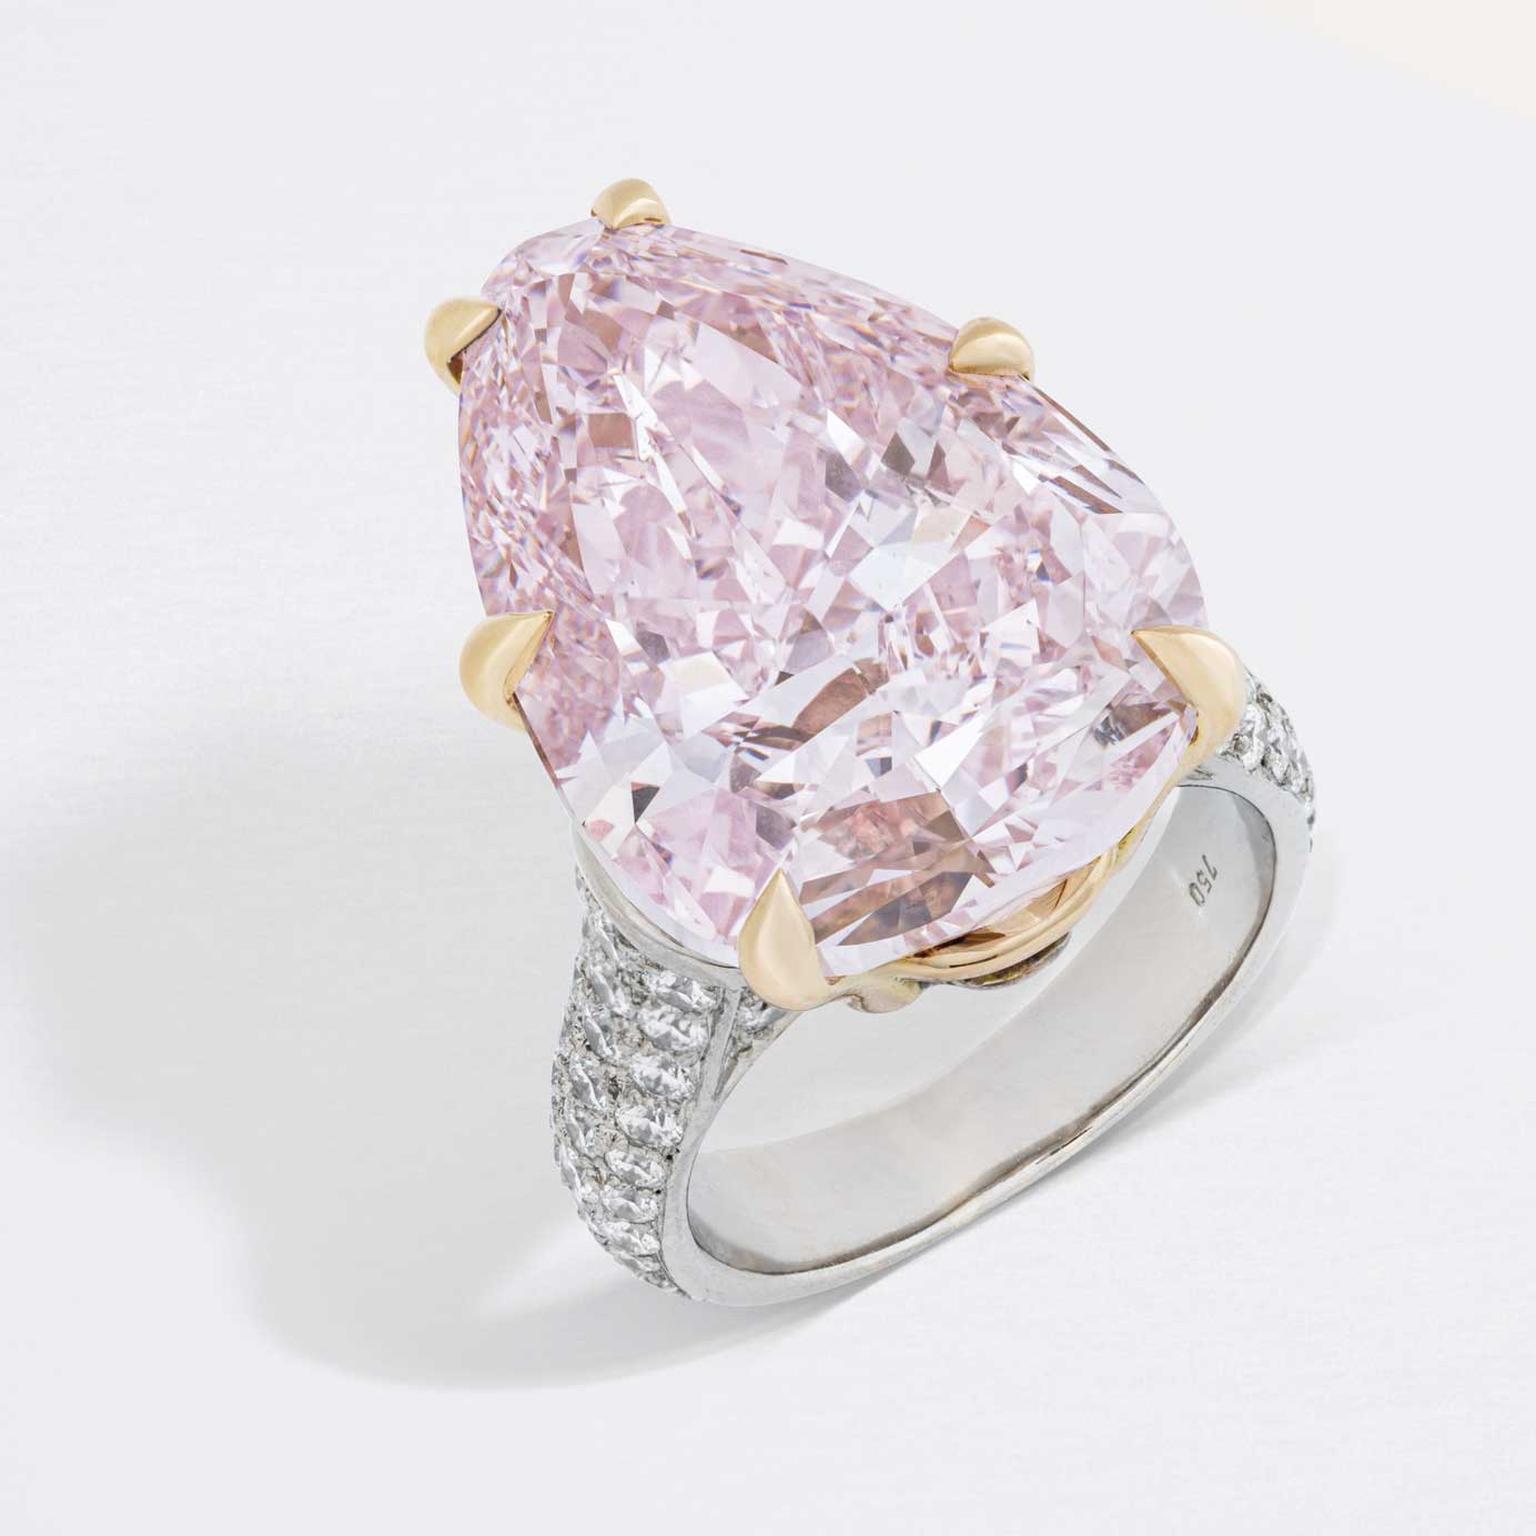 Lot-54-Fancy-pink-diamond-of-20.06-carat